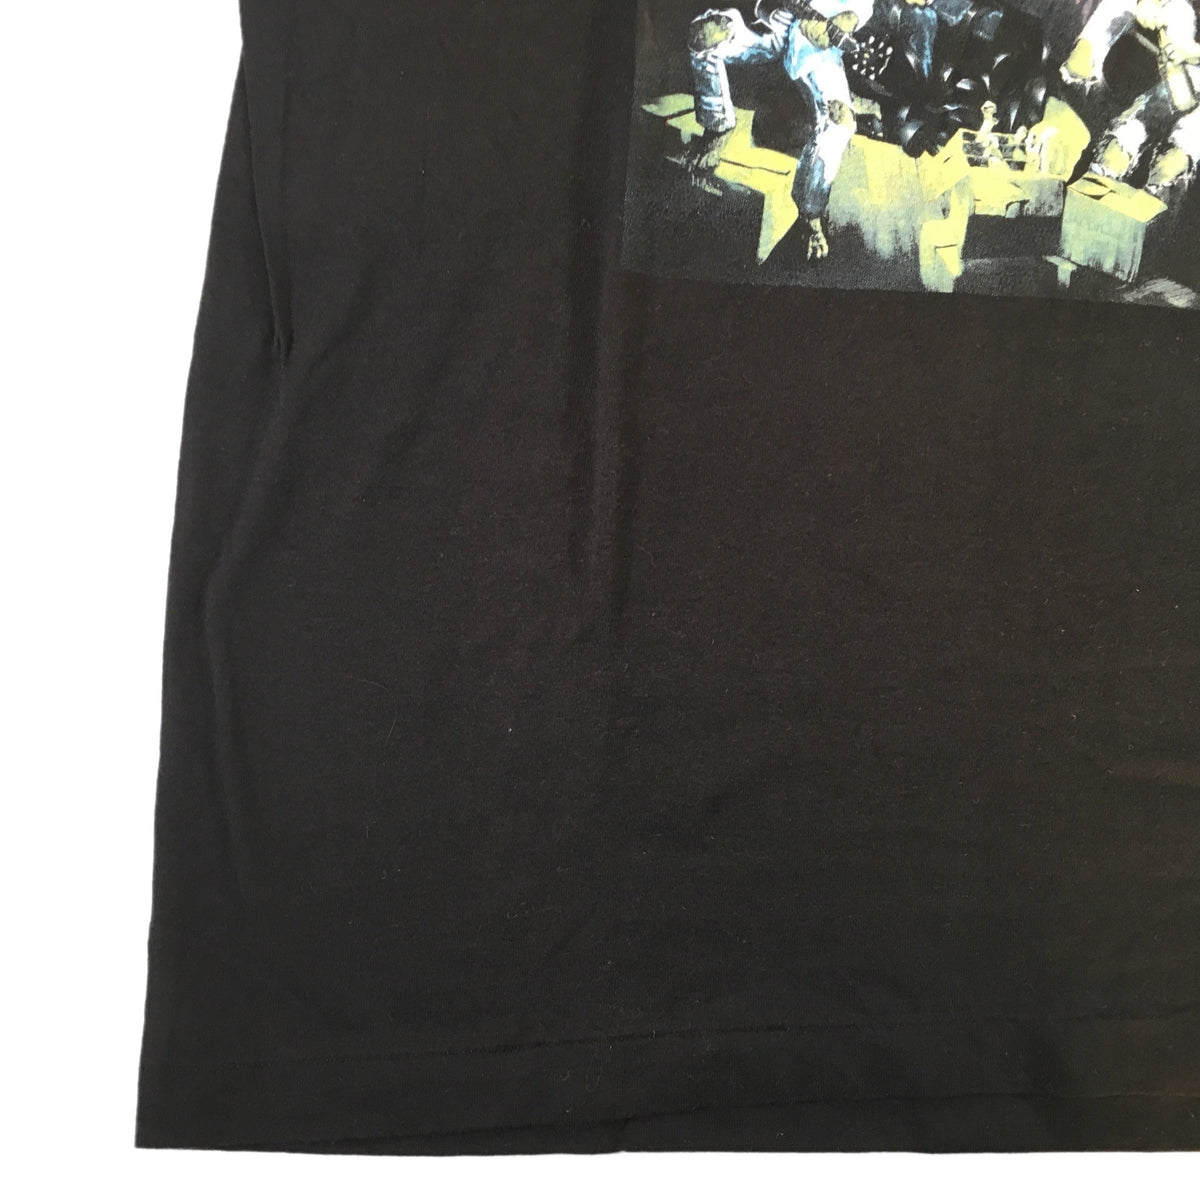 Vintage Jackyl &quot;Chainsaw&quot; T-Shirt - jointcustodydc